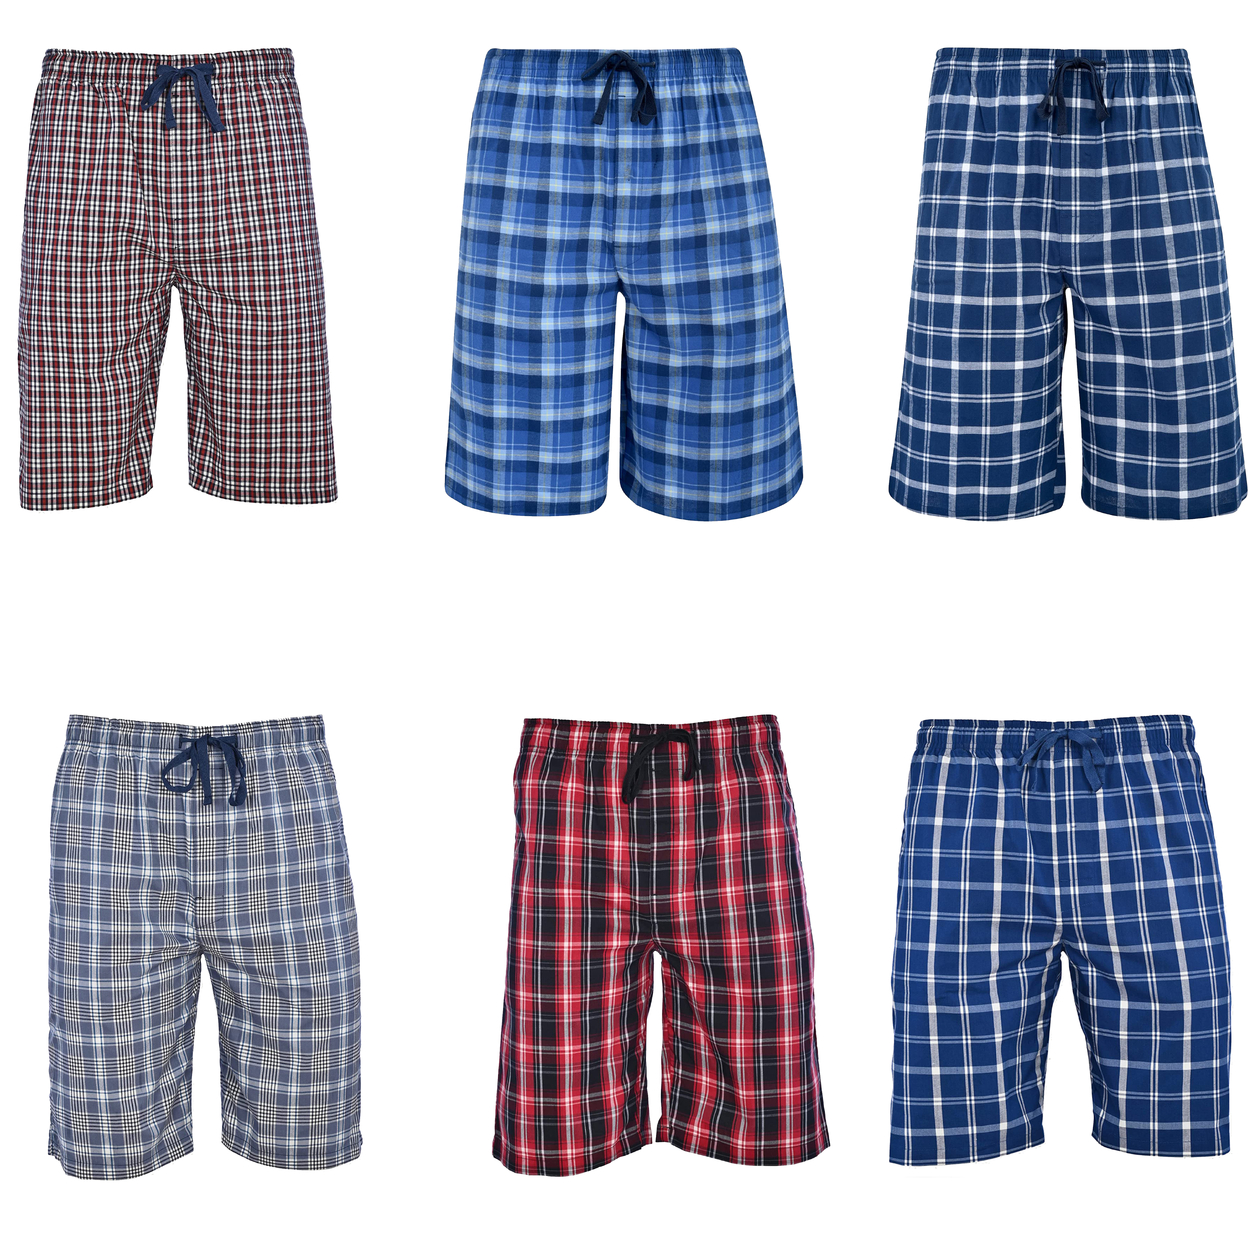 2-Pack: Men's Ultra Soft Plaid Lounge Pajama Sleep Wear Shorts - Black & Black, Medium